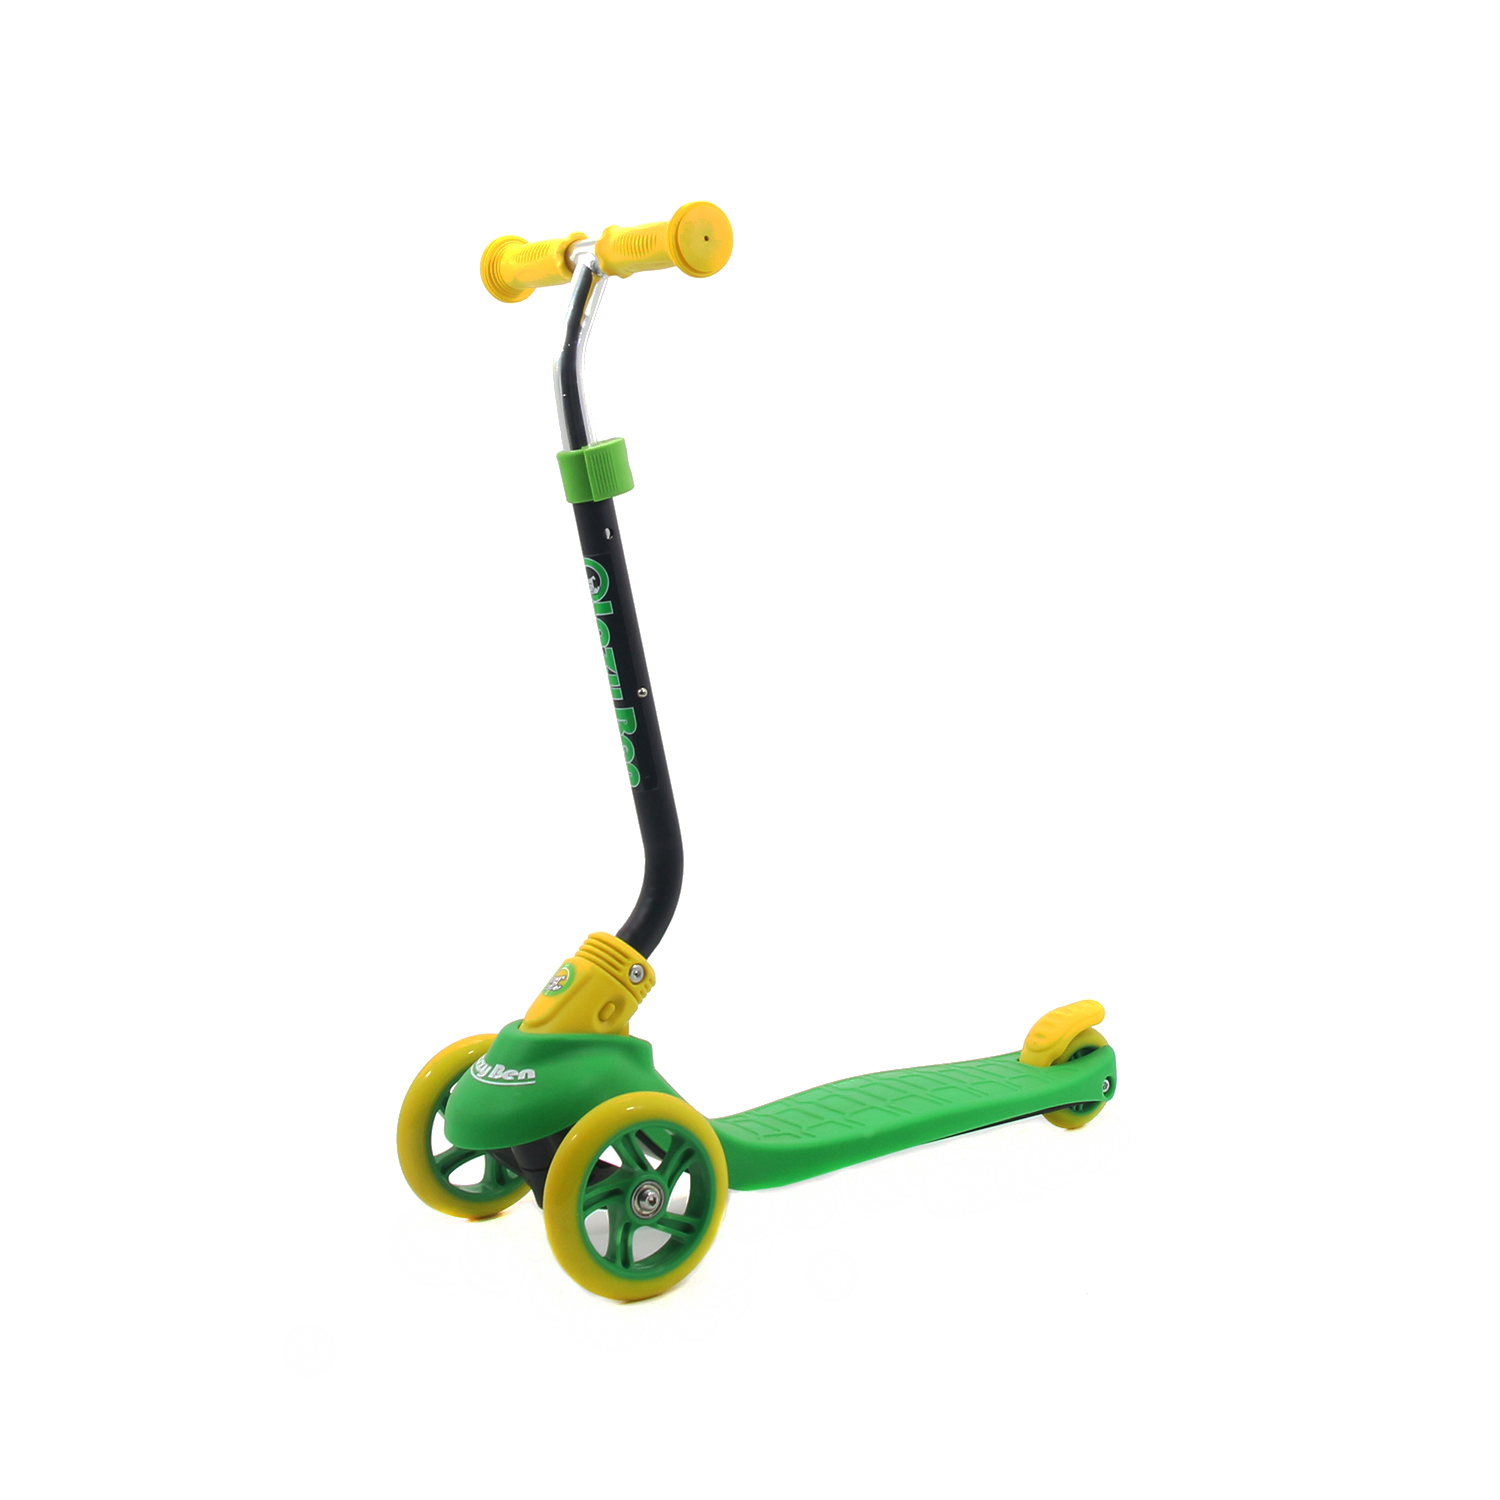 Mini scooter plegable para niños con altura ajustable